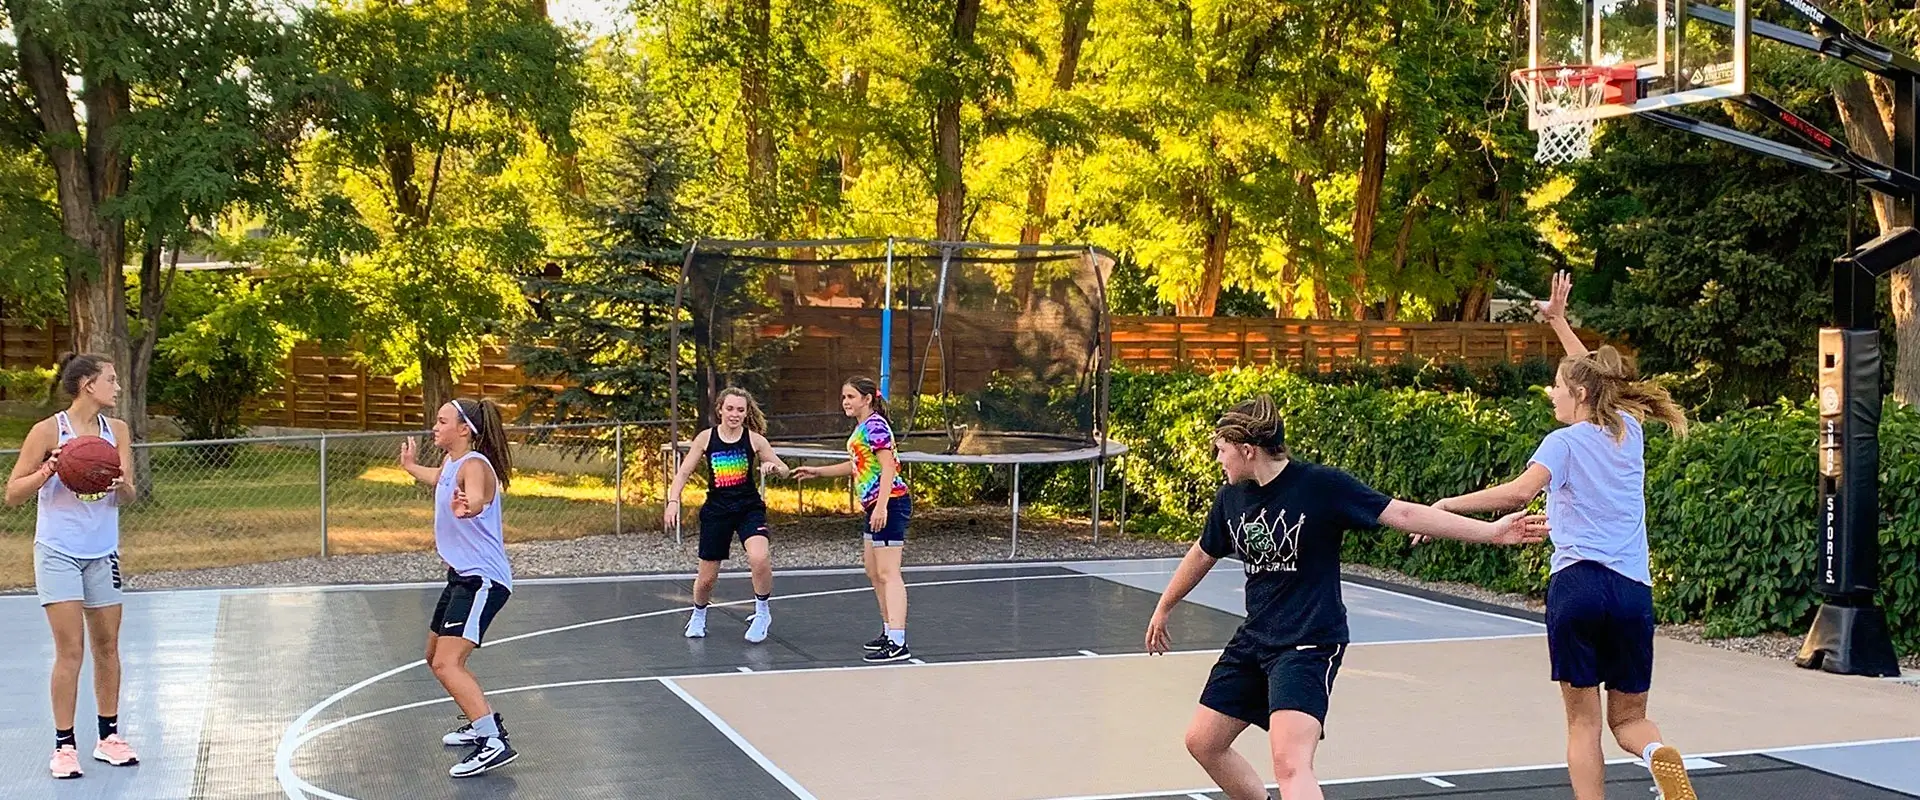 Teen girls play a pickup game of basketball